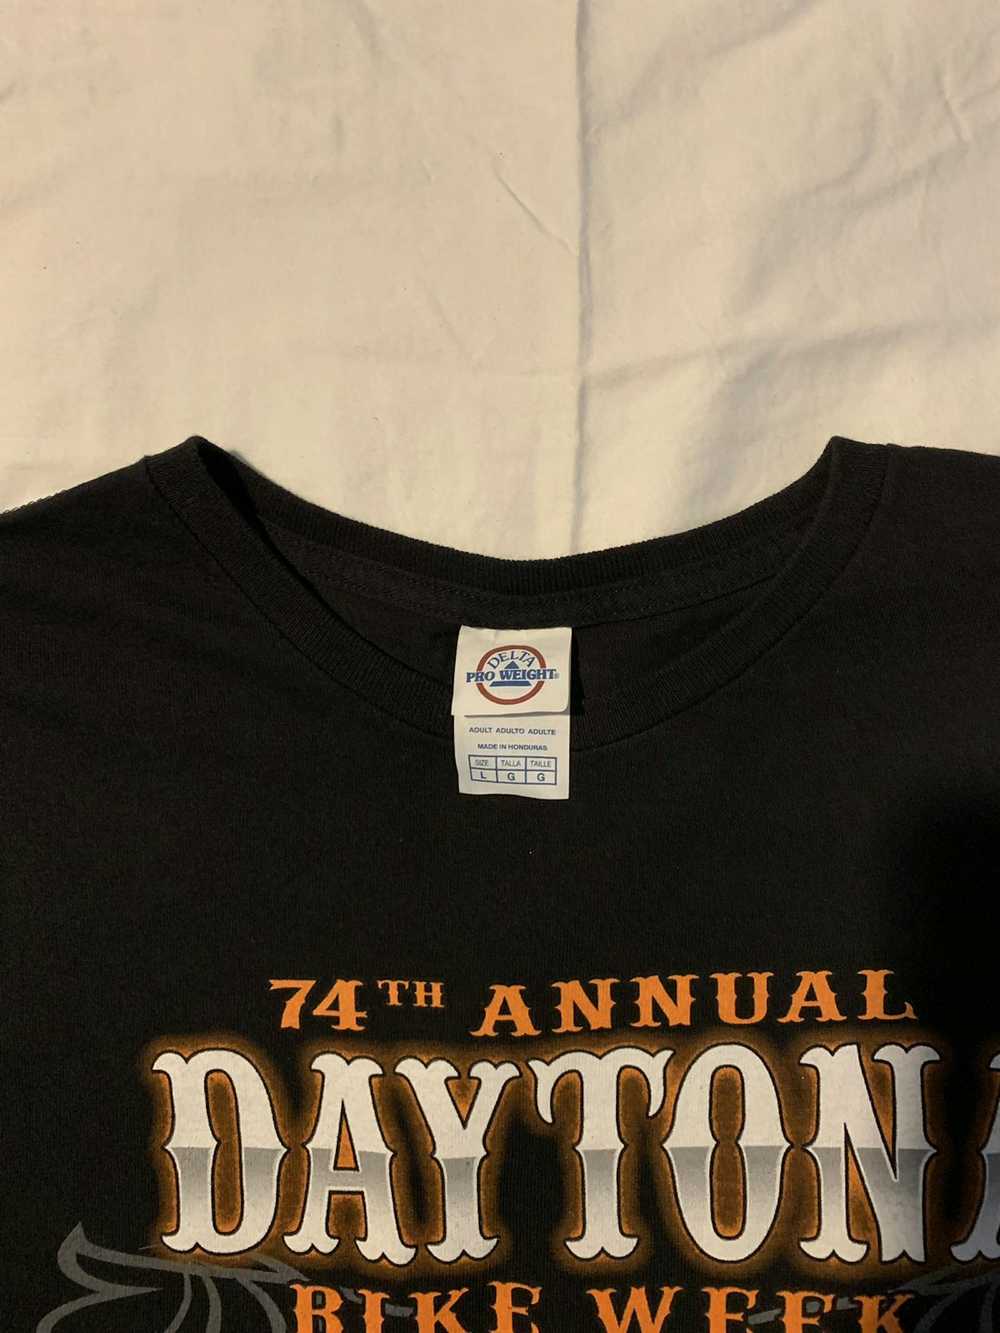 Delta 2015 Daytona Bike Week t-shirt - image 3